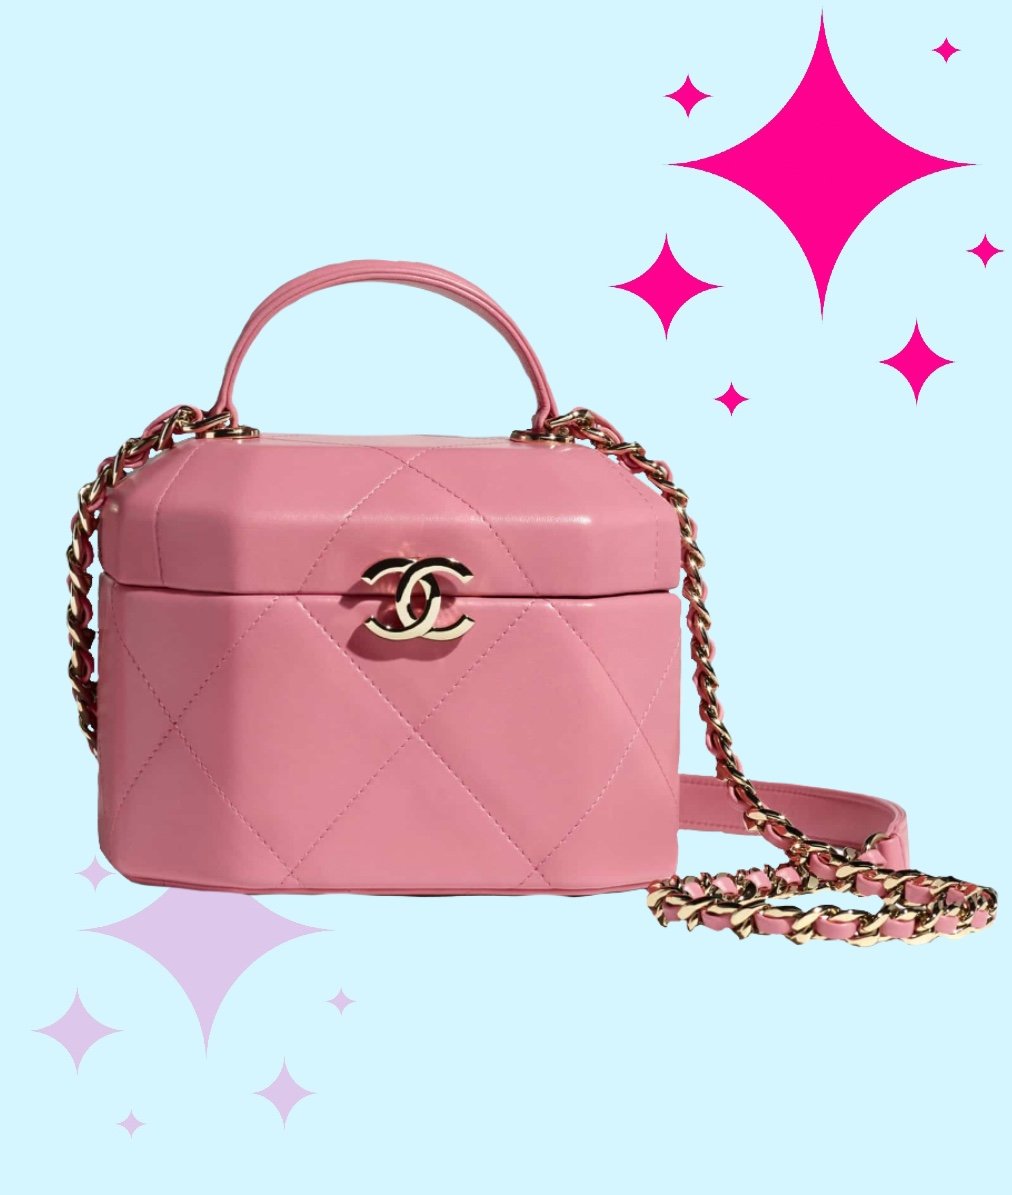 K on X: Margot Robbie as Barbie wearing the SS95 Chanel handbag